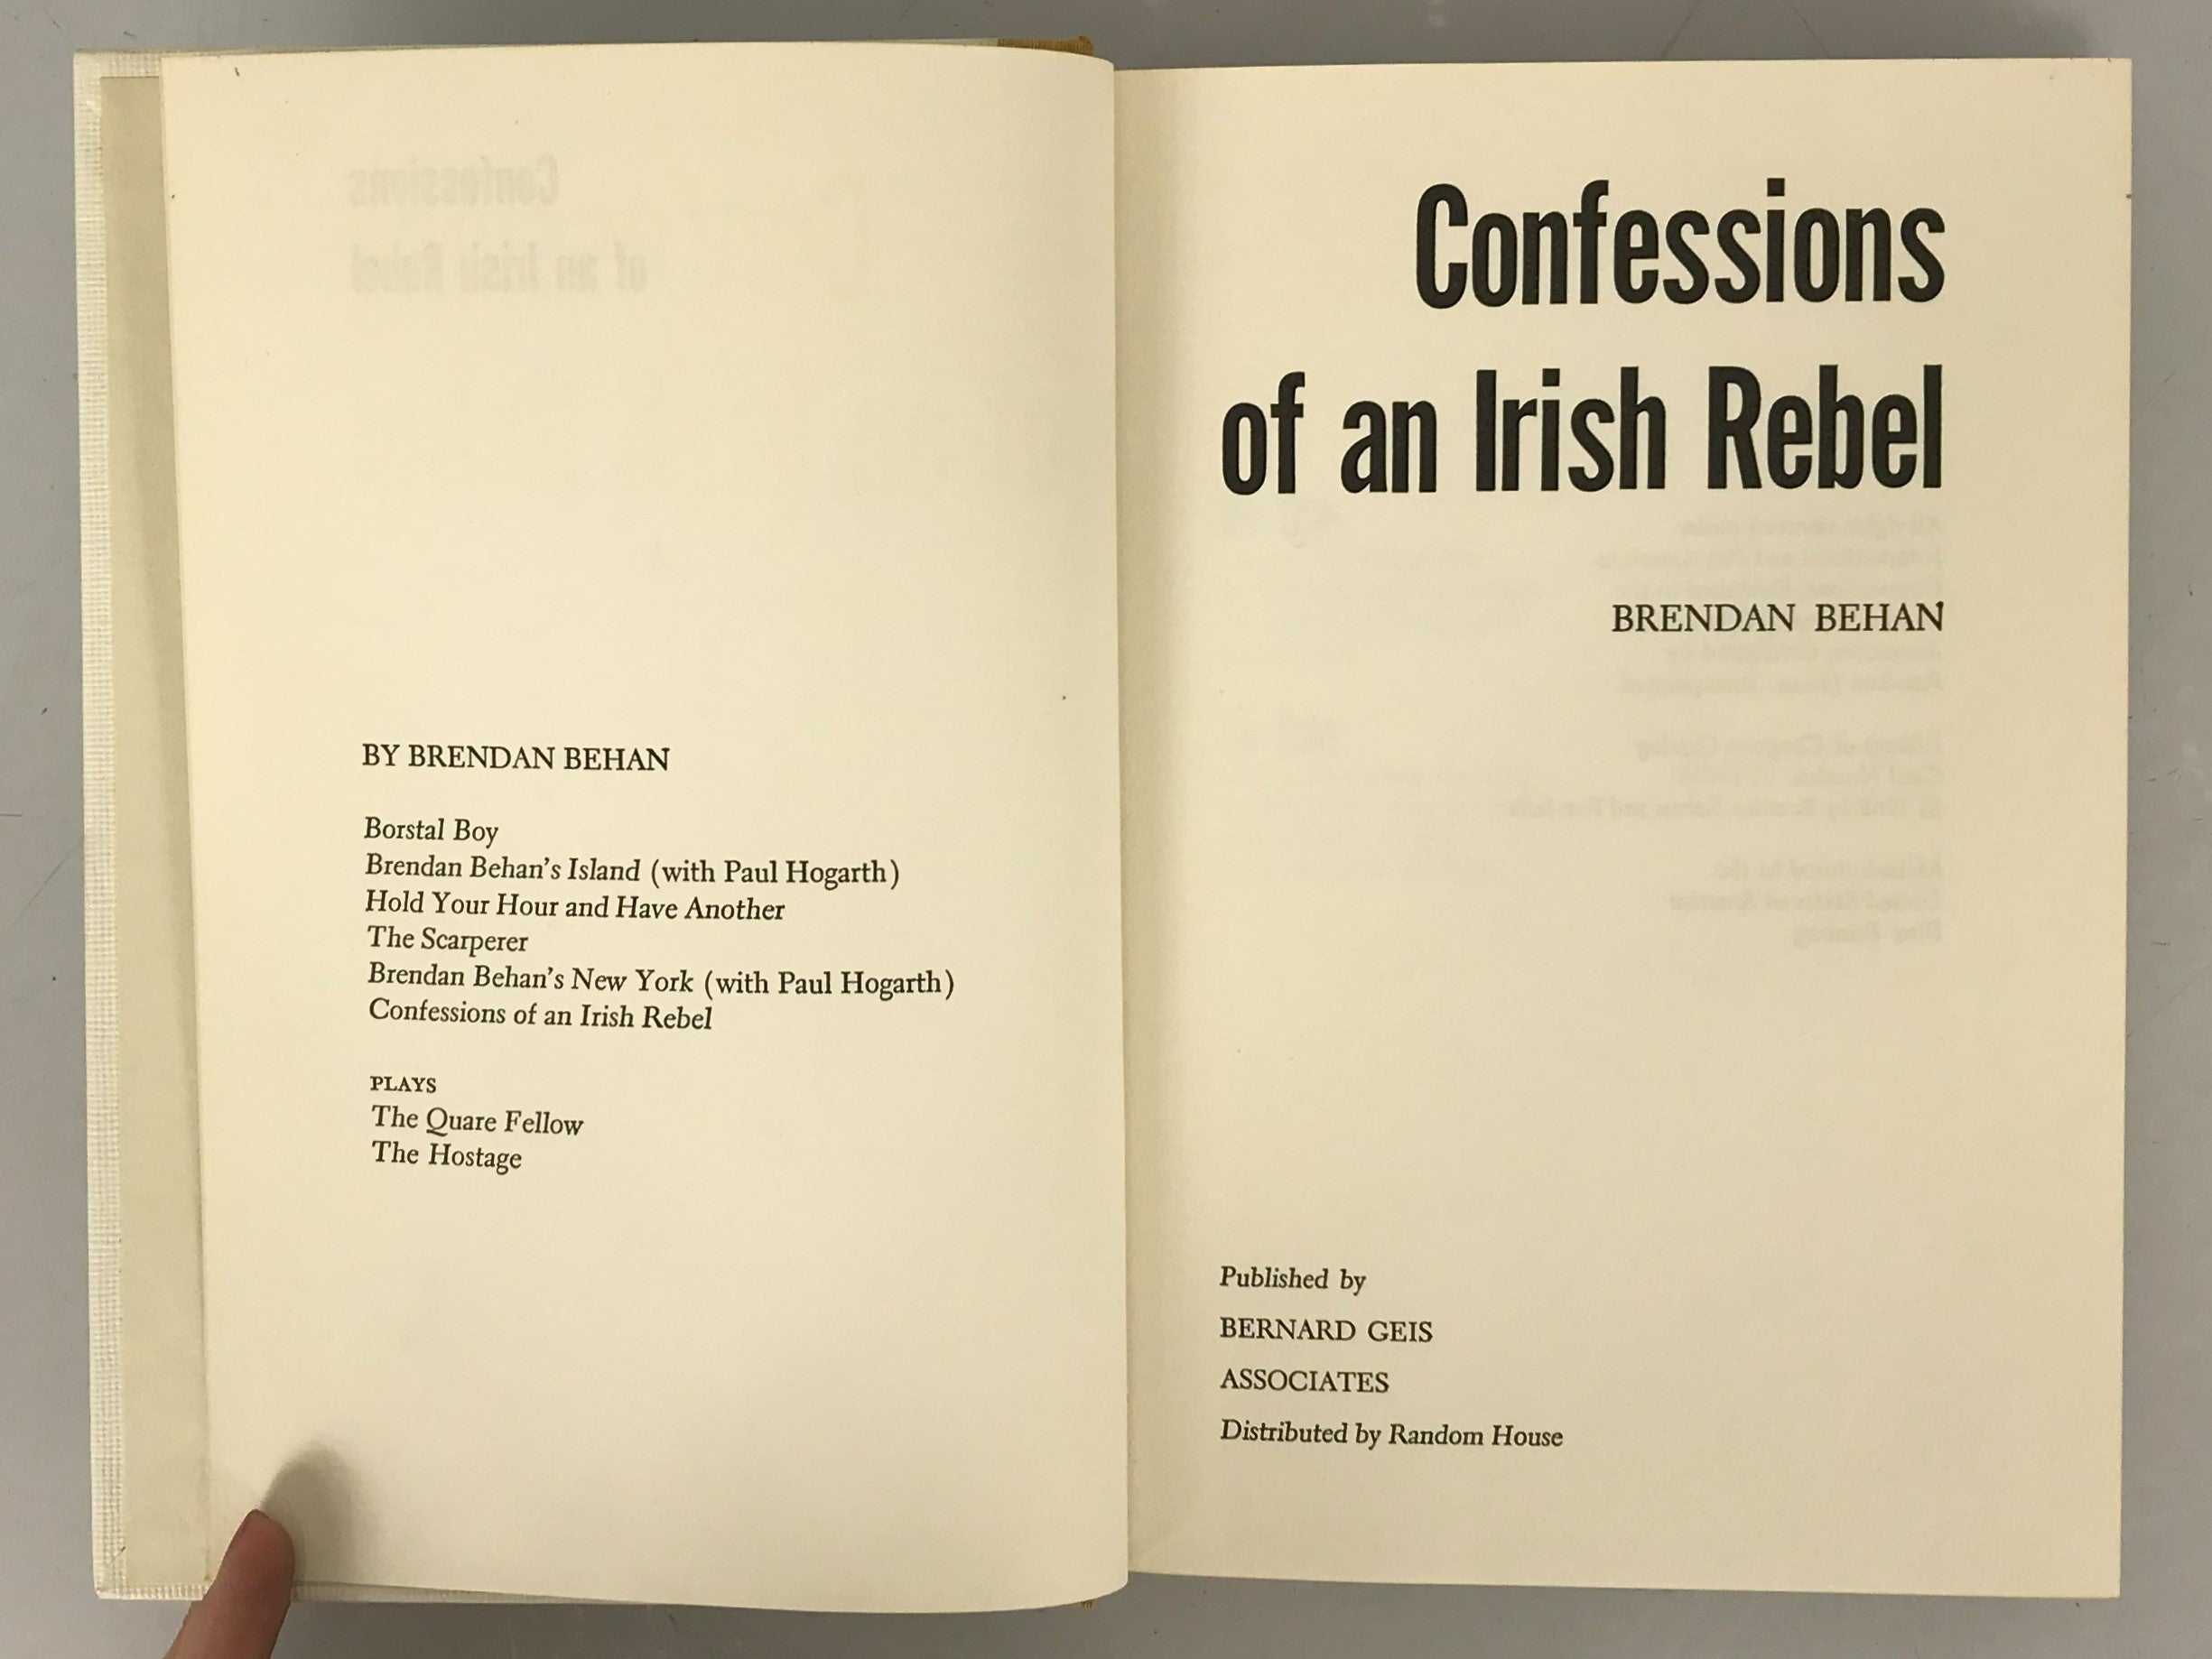 Lot of 2 Brendan Behan Confessions of an Irish Rebel 1965 The Scarperer 1964 HC DJ